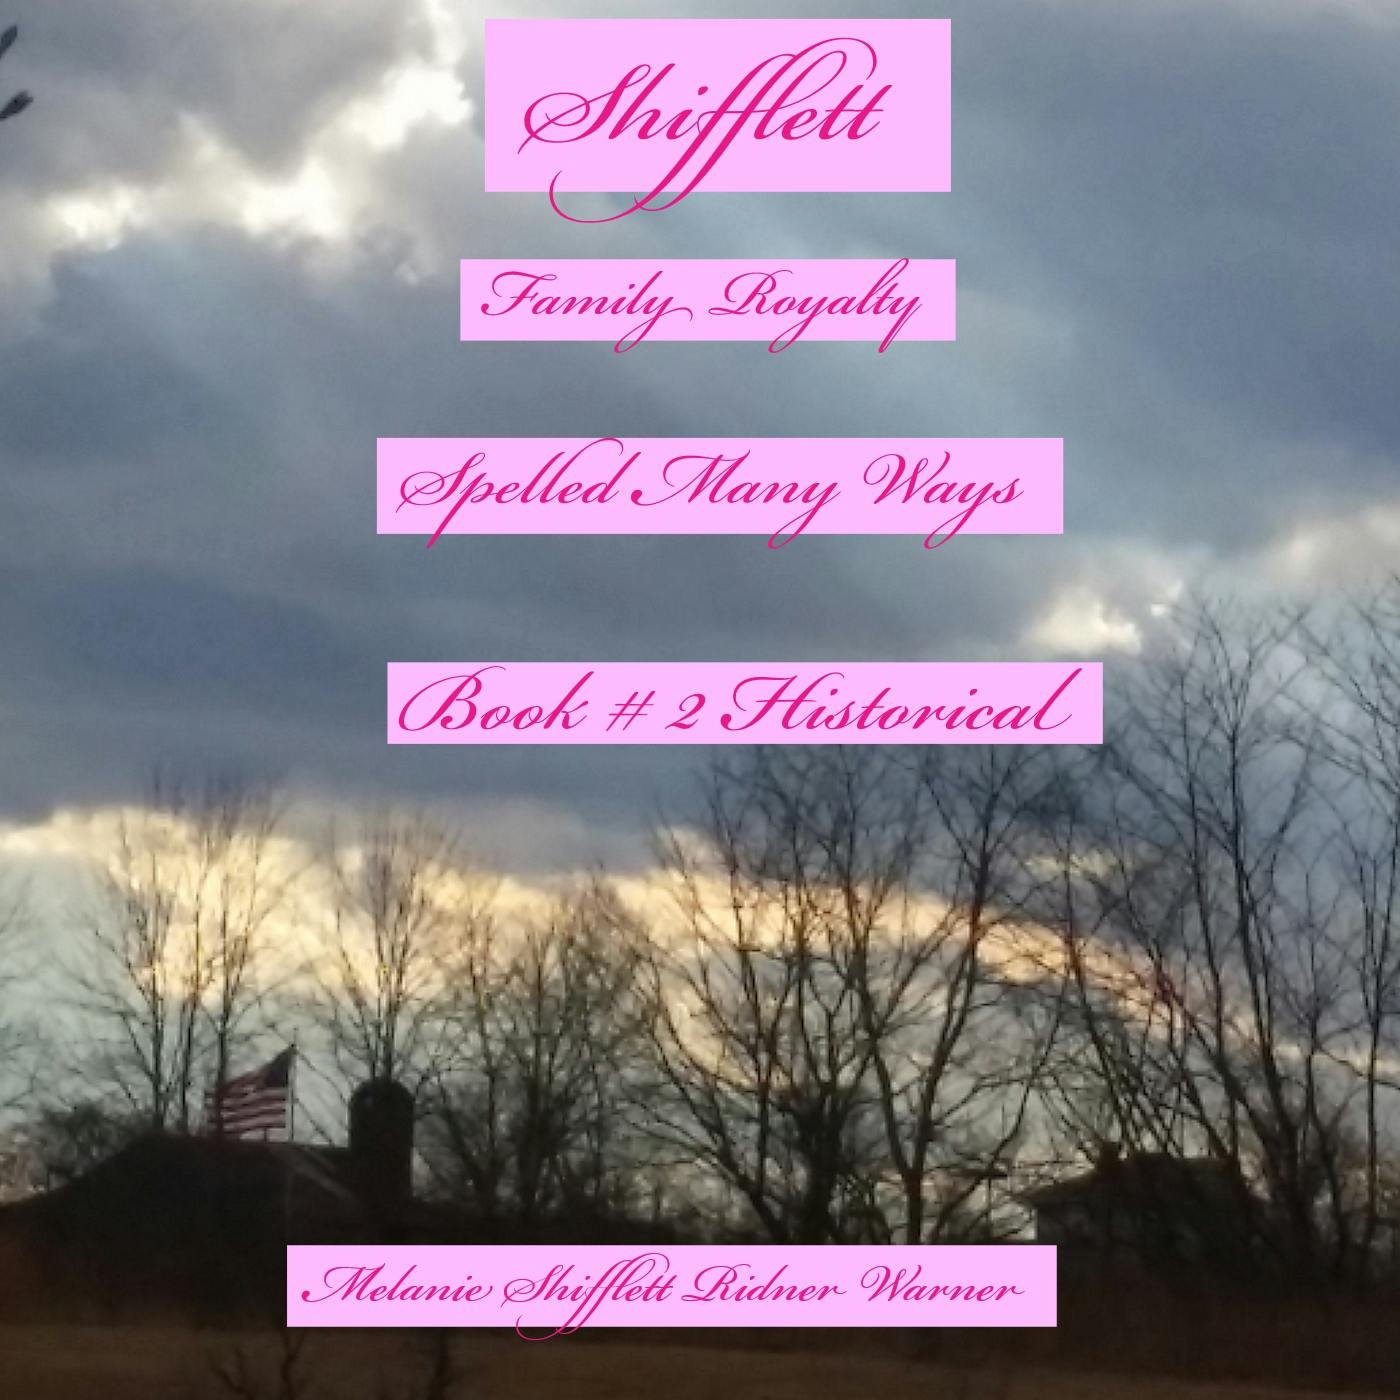 Shifflett: Family Royalty Spelled Many Ways - undefined